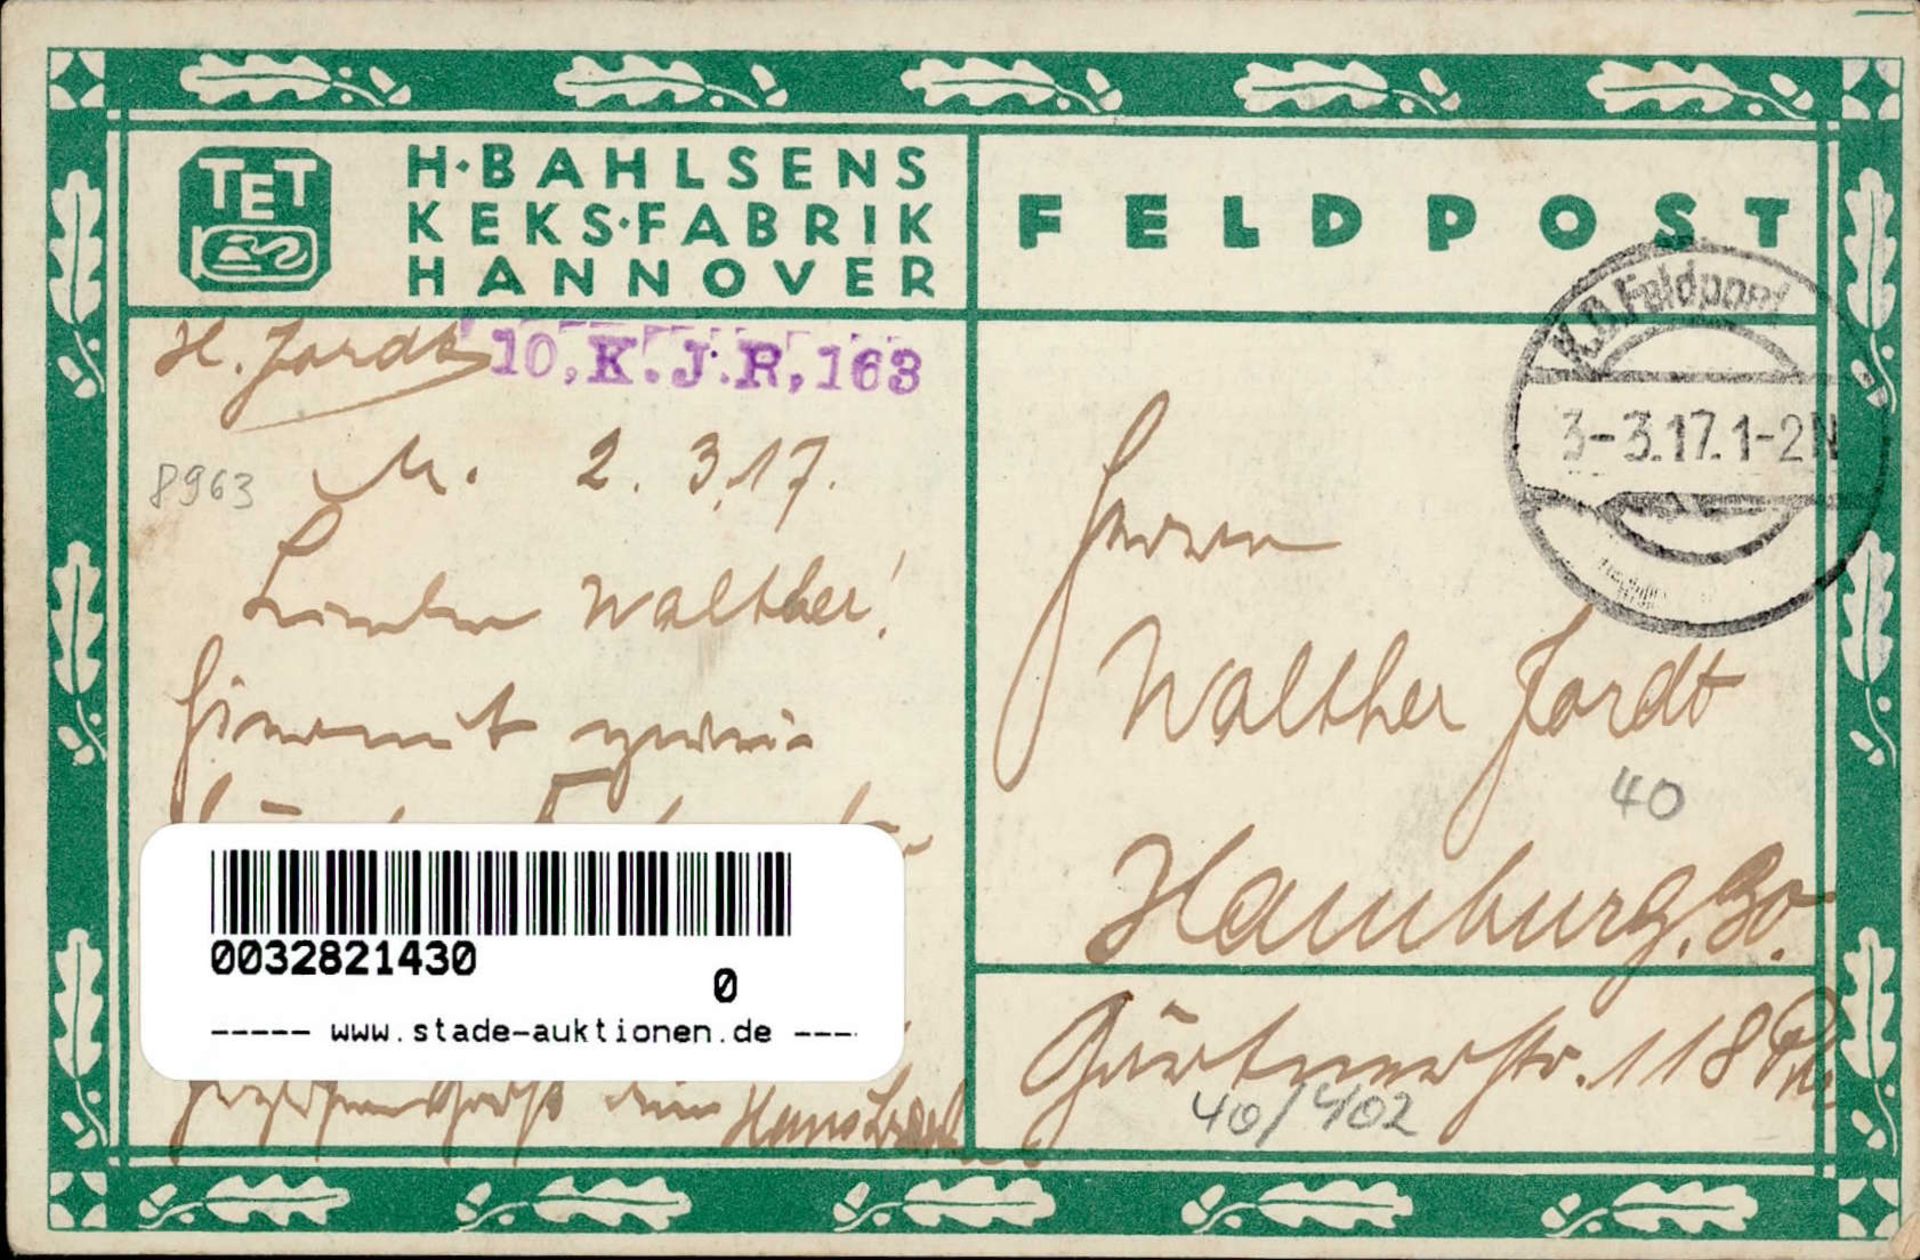 Werbung Bahlsen Hannover Keksfabrik Zeppelin Feldpost 1917 I-II (kl. Stauchungen und Randmängel) - Image 2 of 2